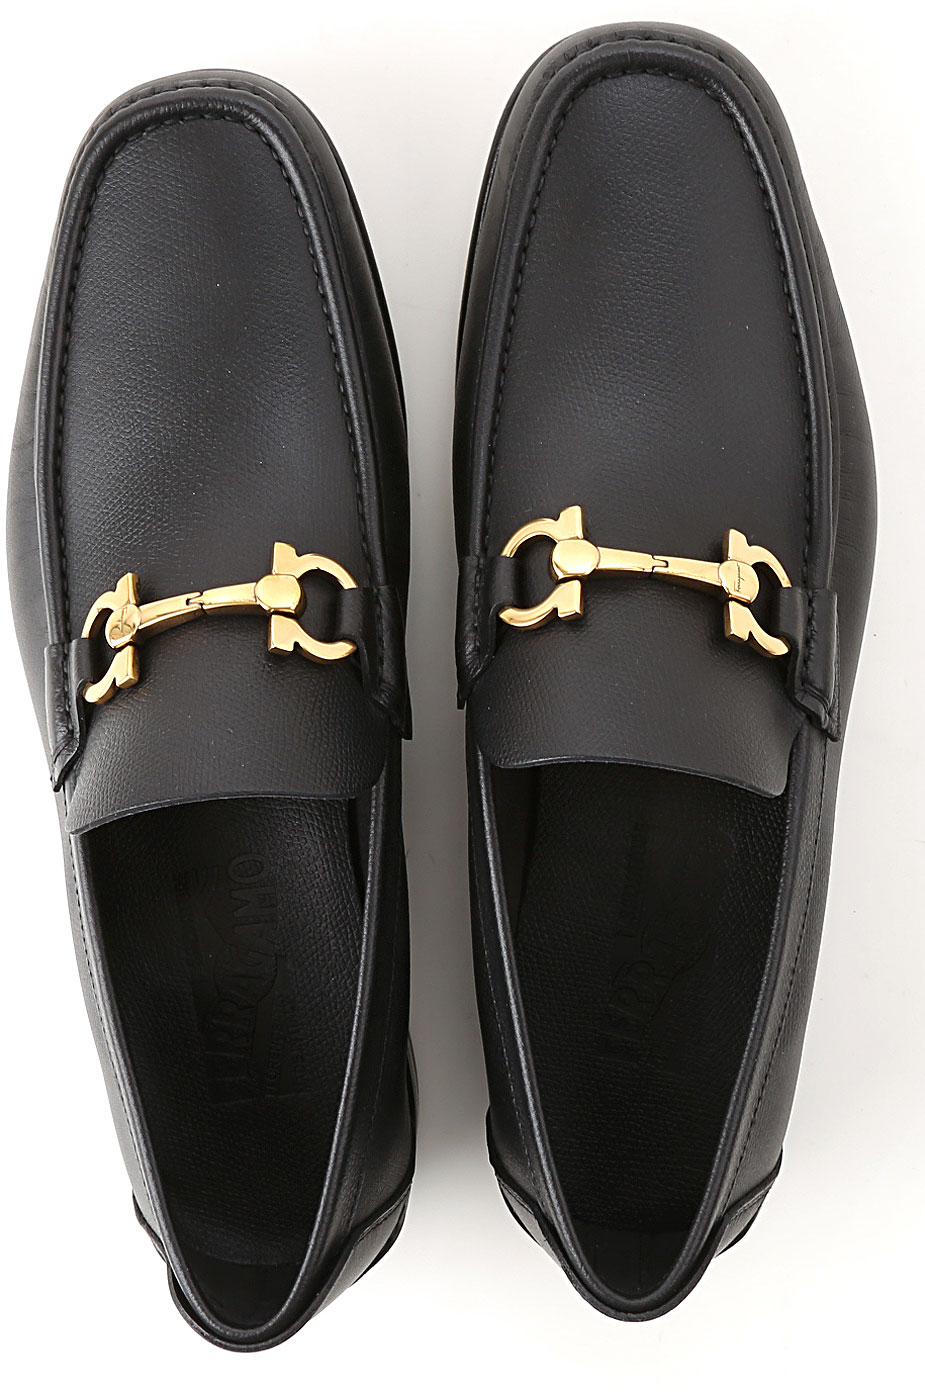 Mens Shoes Salvatore Ferragamo, Style code: 703742-fiordi-02a210